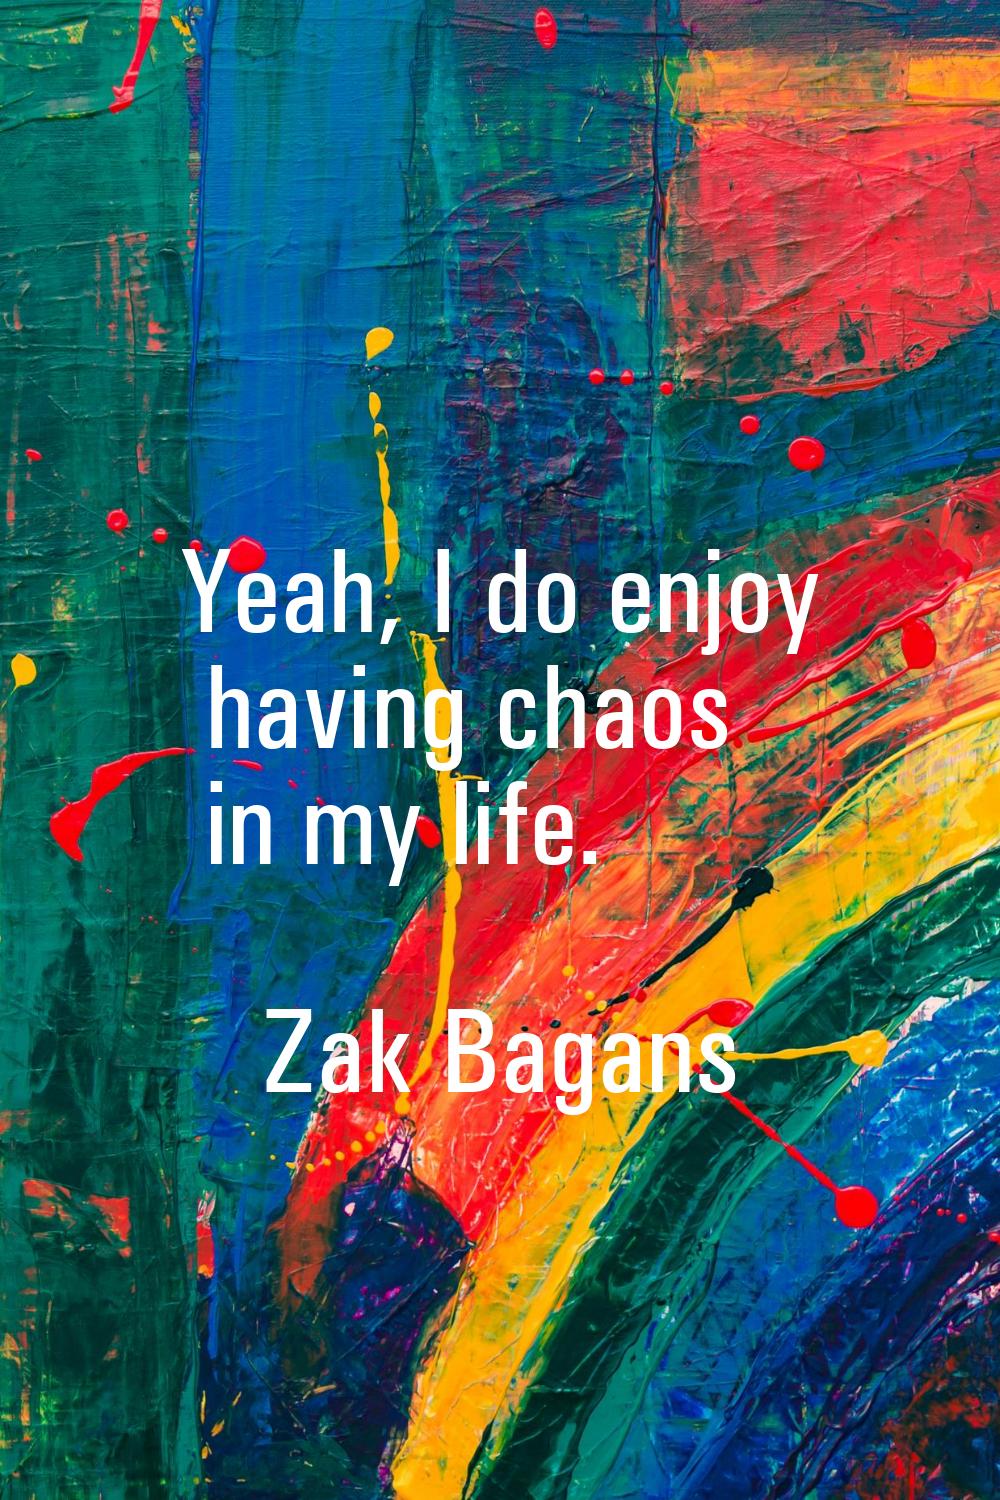 Yeah, I do enjoy having chaos in my life.